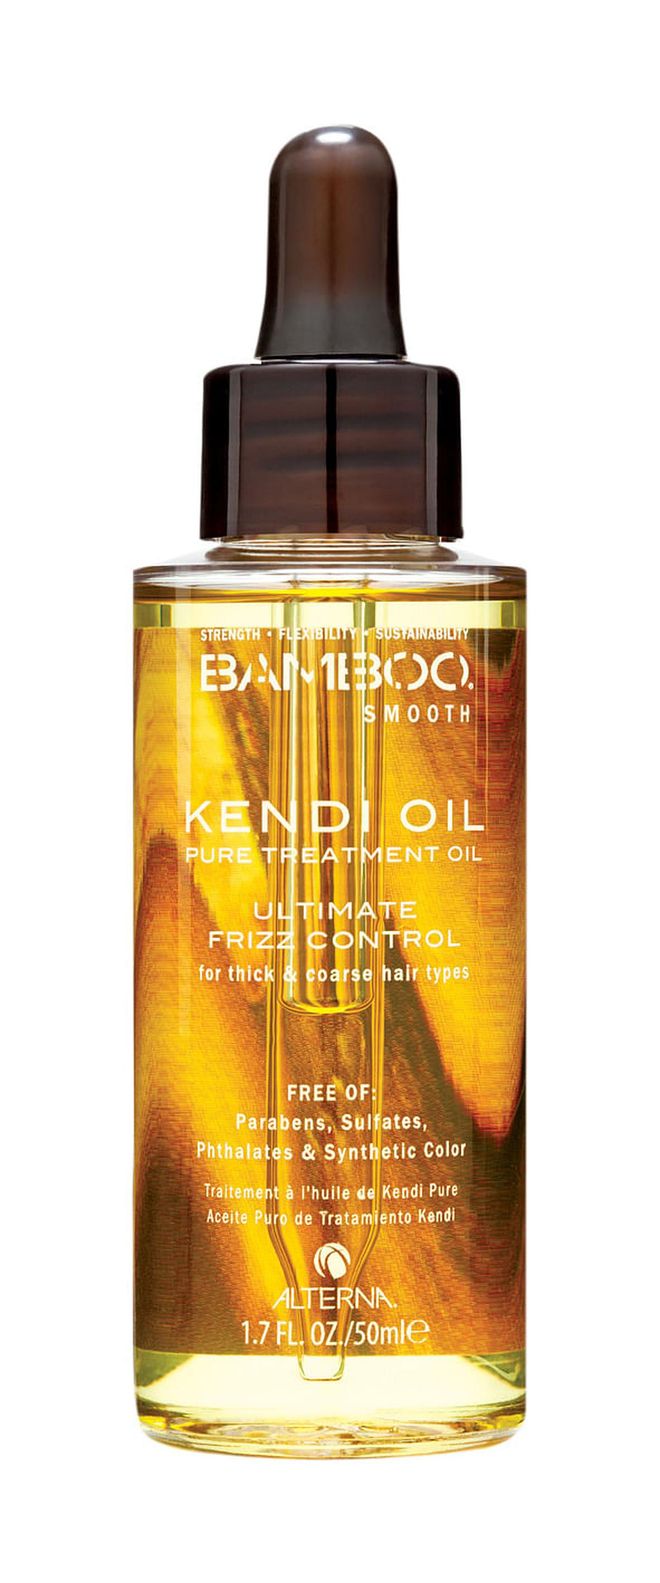 Alterna Bamboo Smooth Kendi Pure Treatment Oil, $38